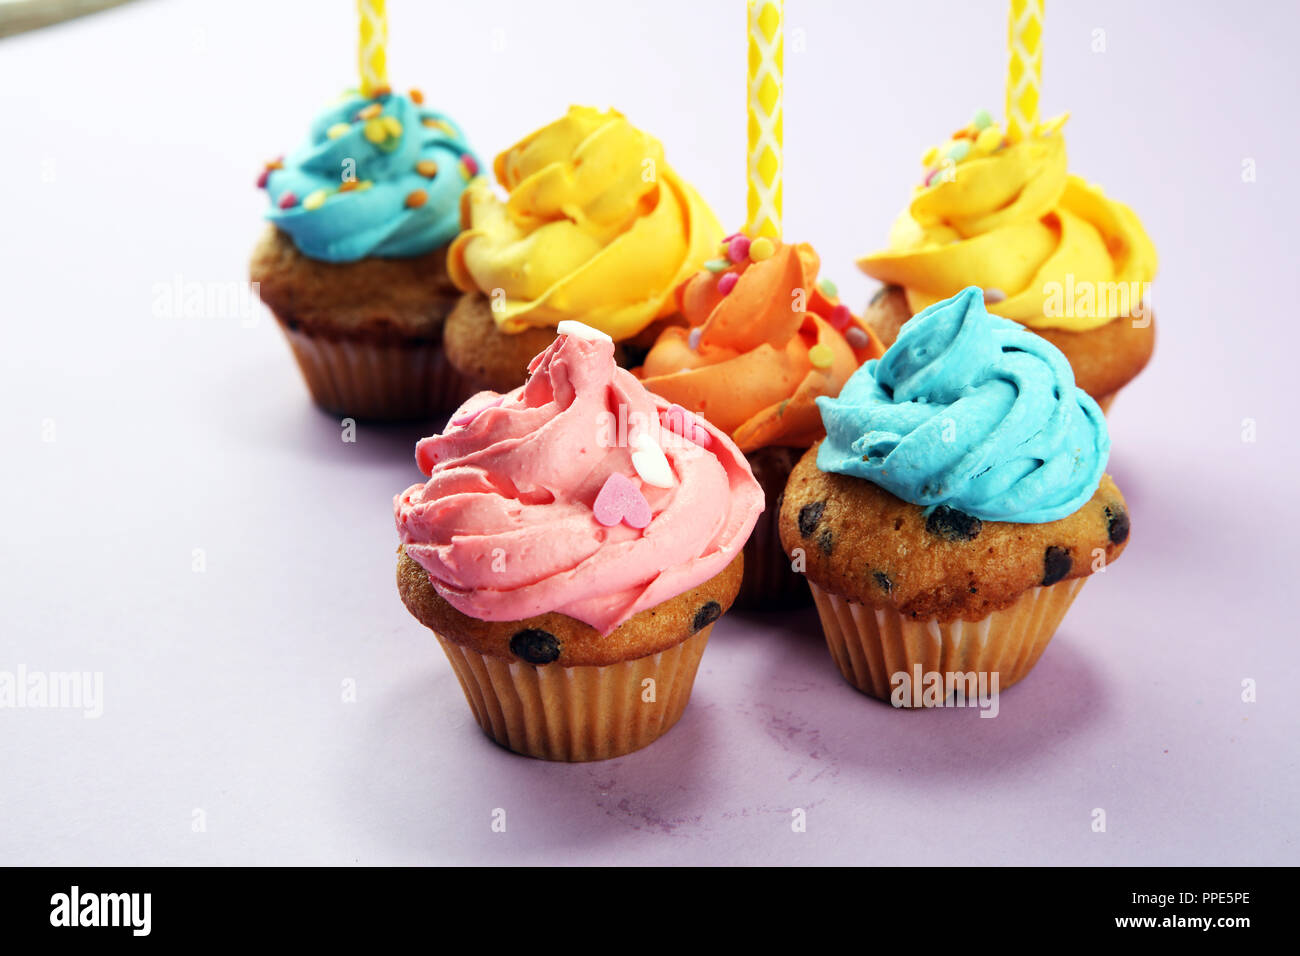 Tasty cupcakes on pinke background. Birthday cupcake in rainbow colors Stock Photo